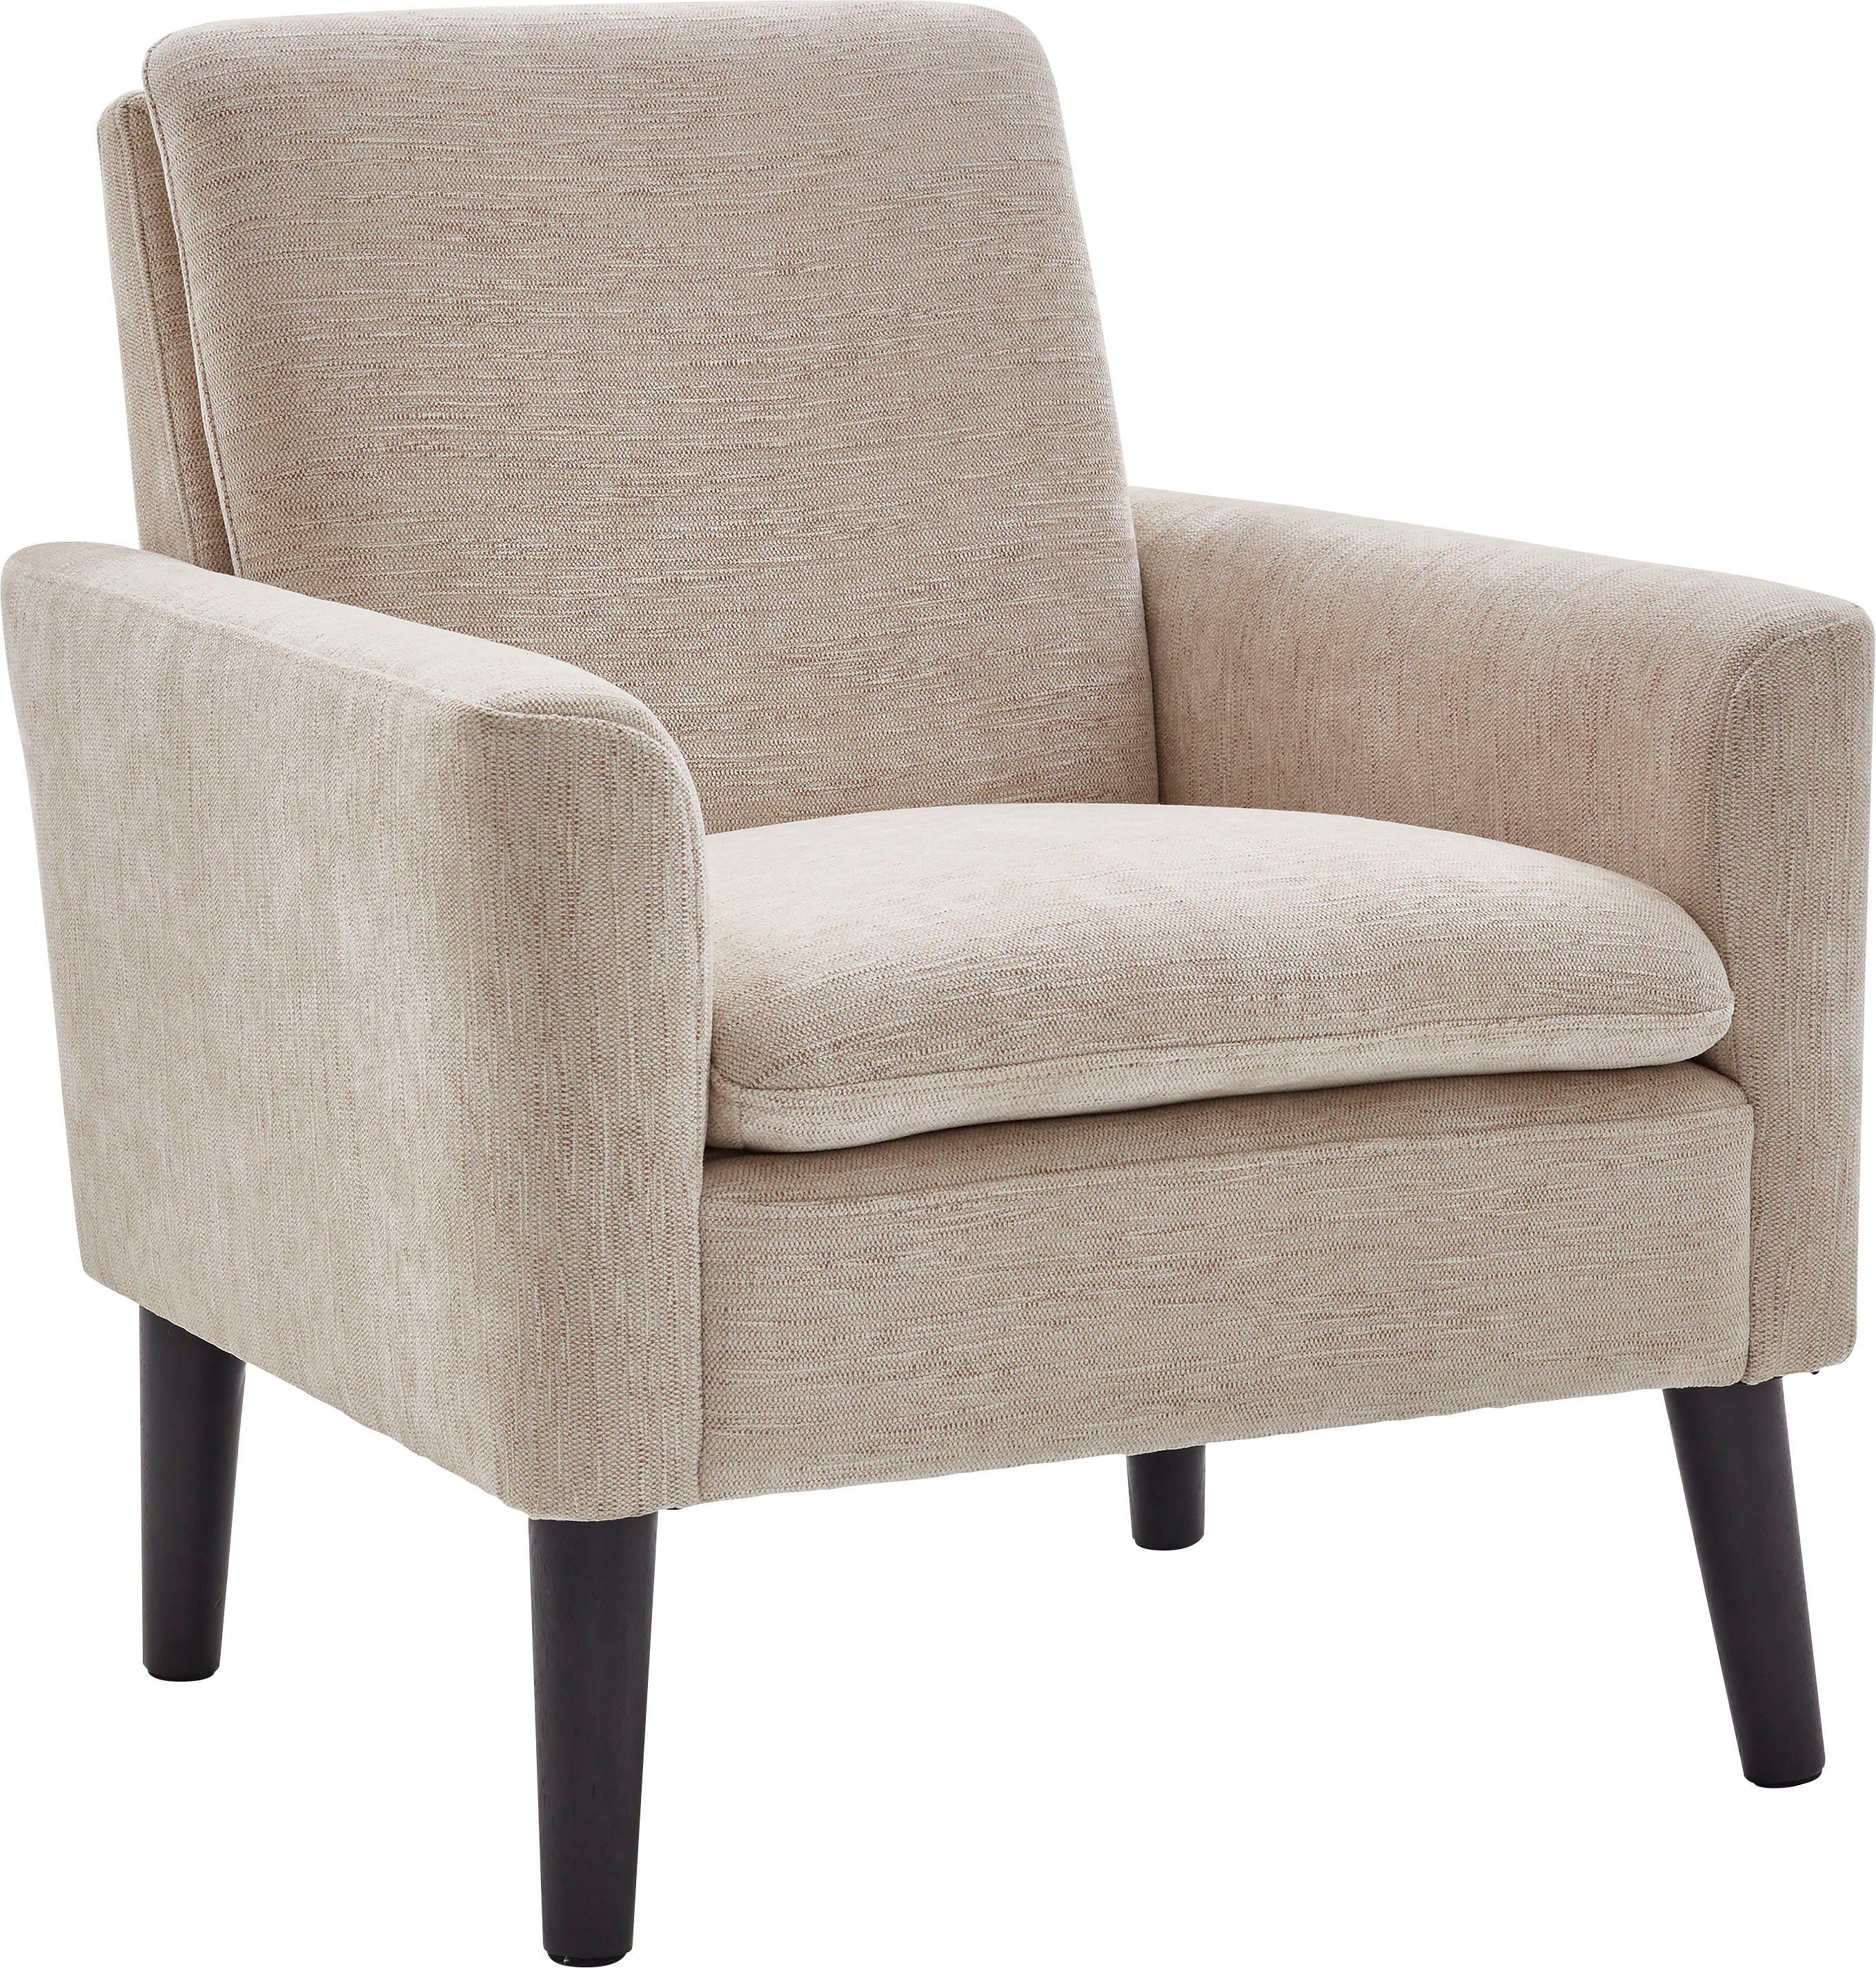 stellbar, collection Sessel hoher mit home im ATLANTIC Kimmy, Raum frei Chenille-Bezug, Sitzkomfort